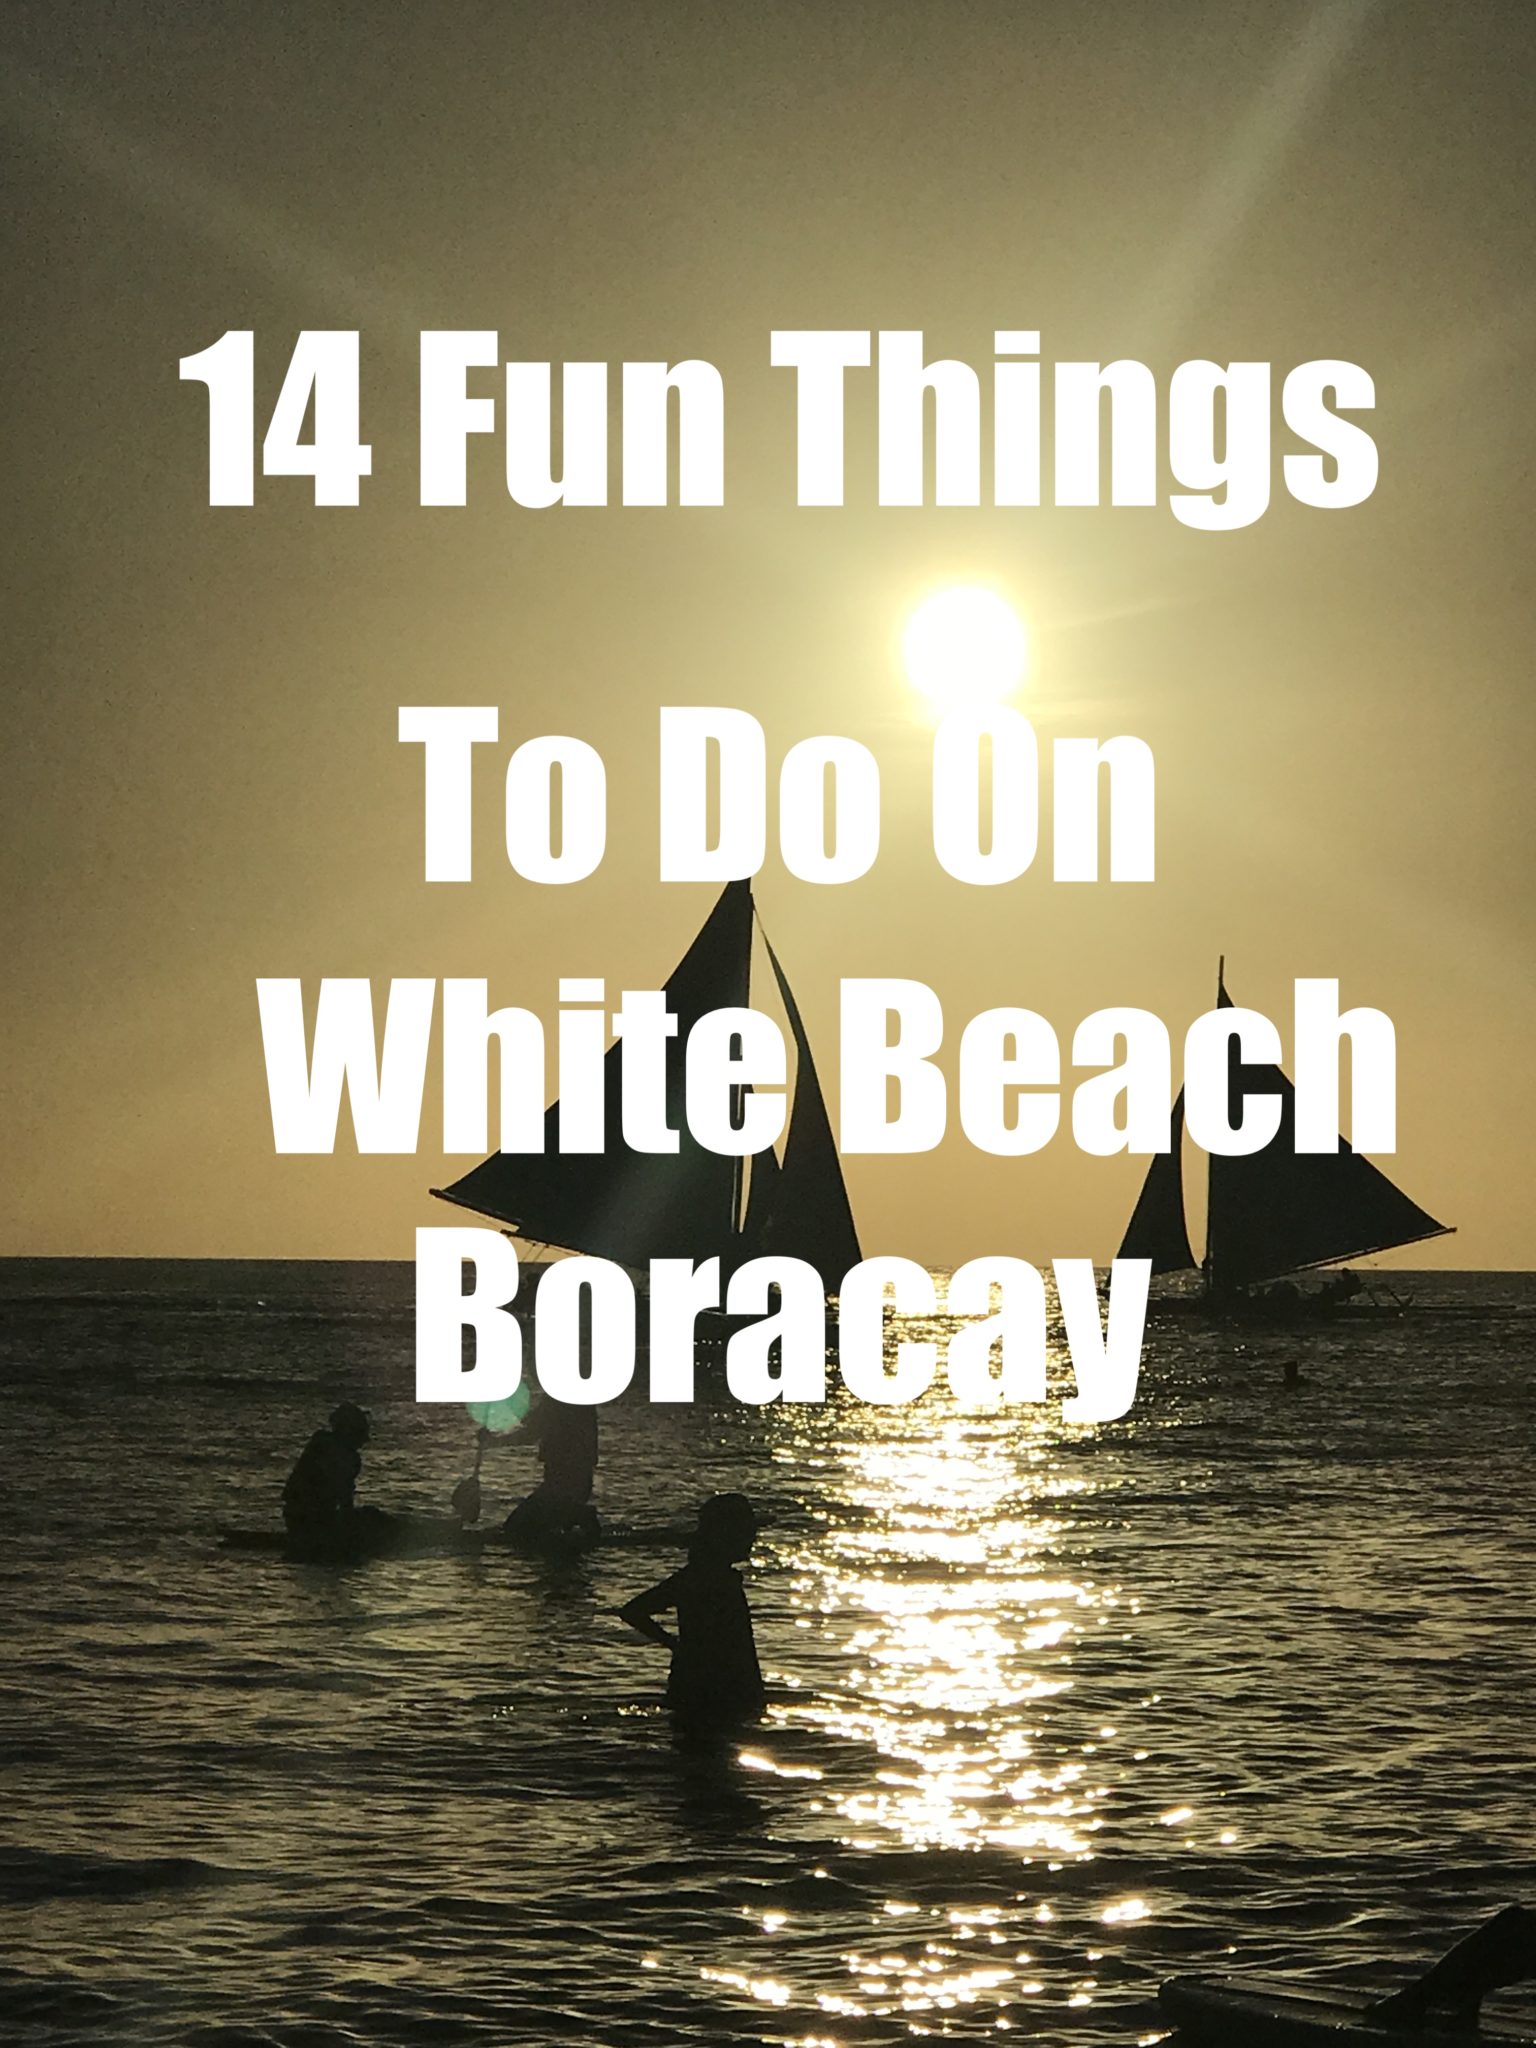 Fun Things to do on White Beach Boracay, Philippines